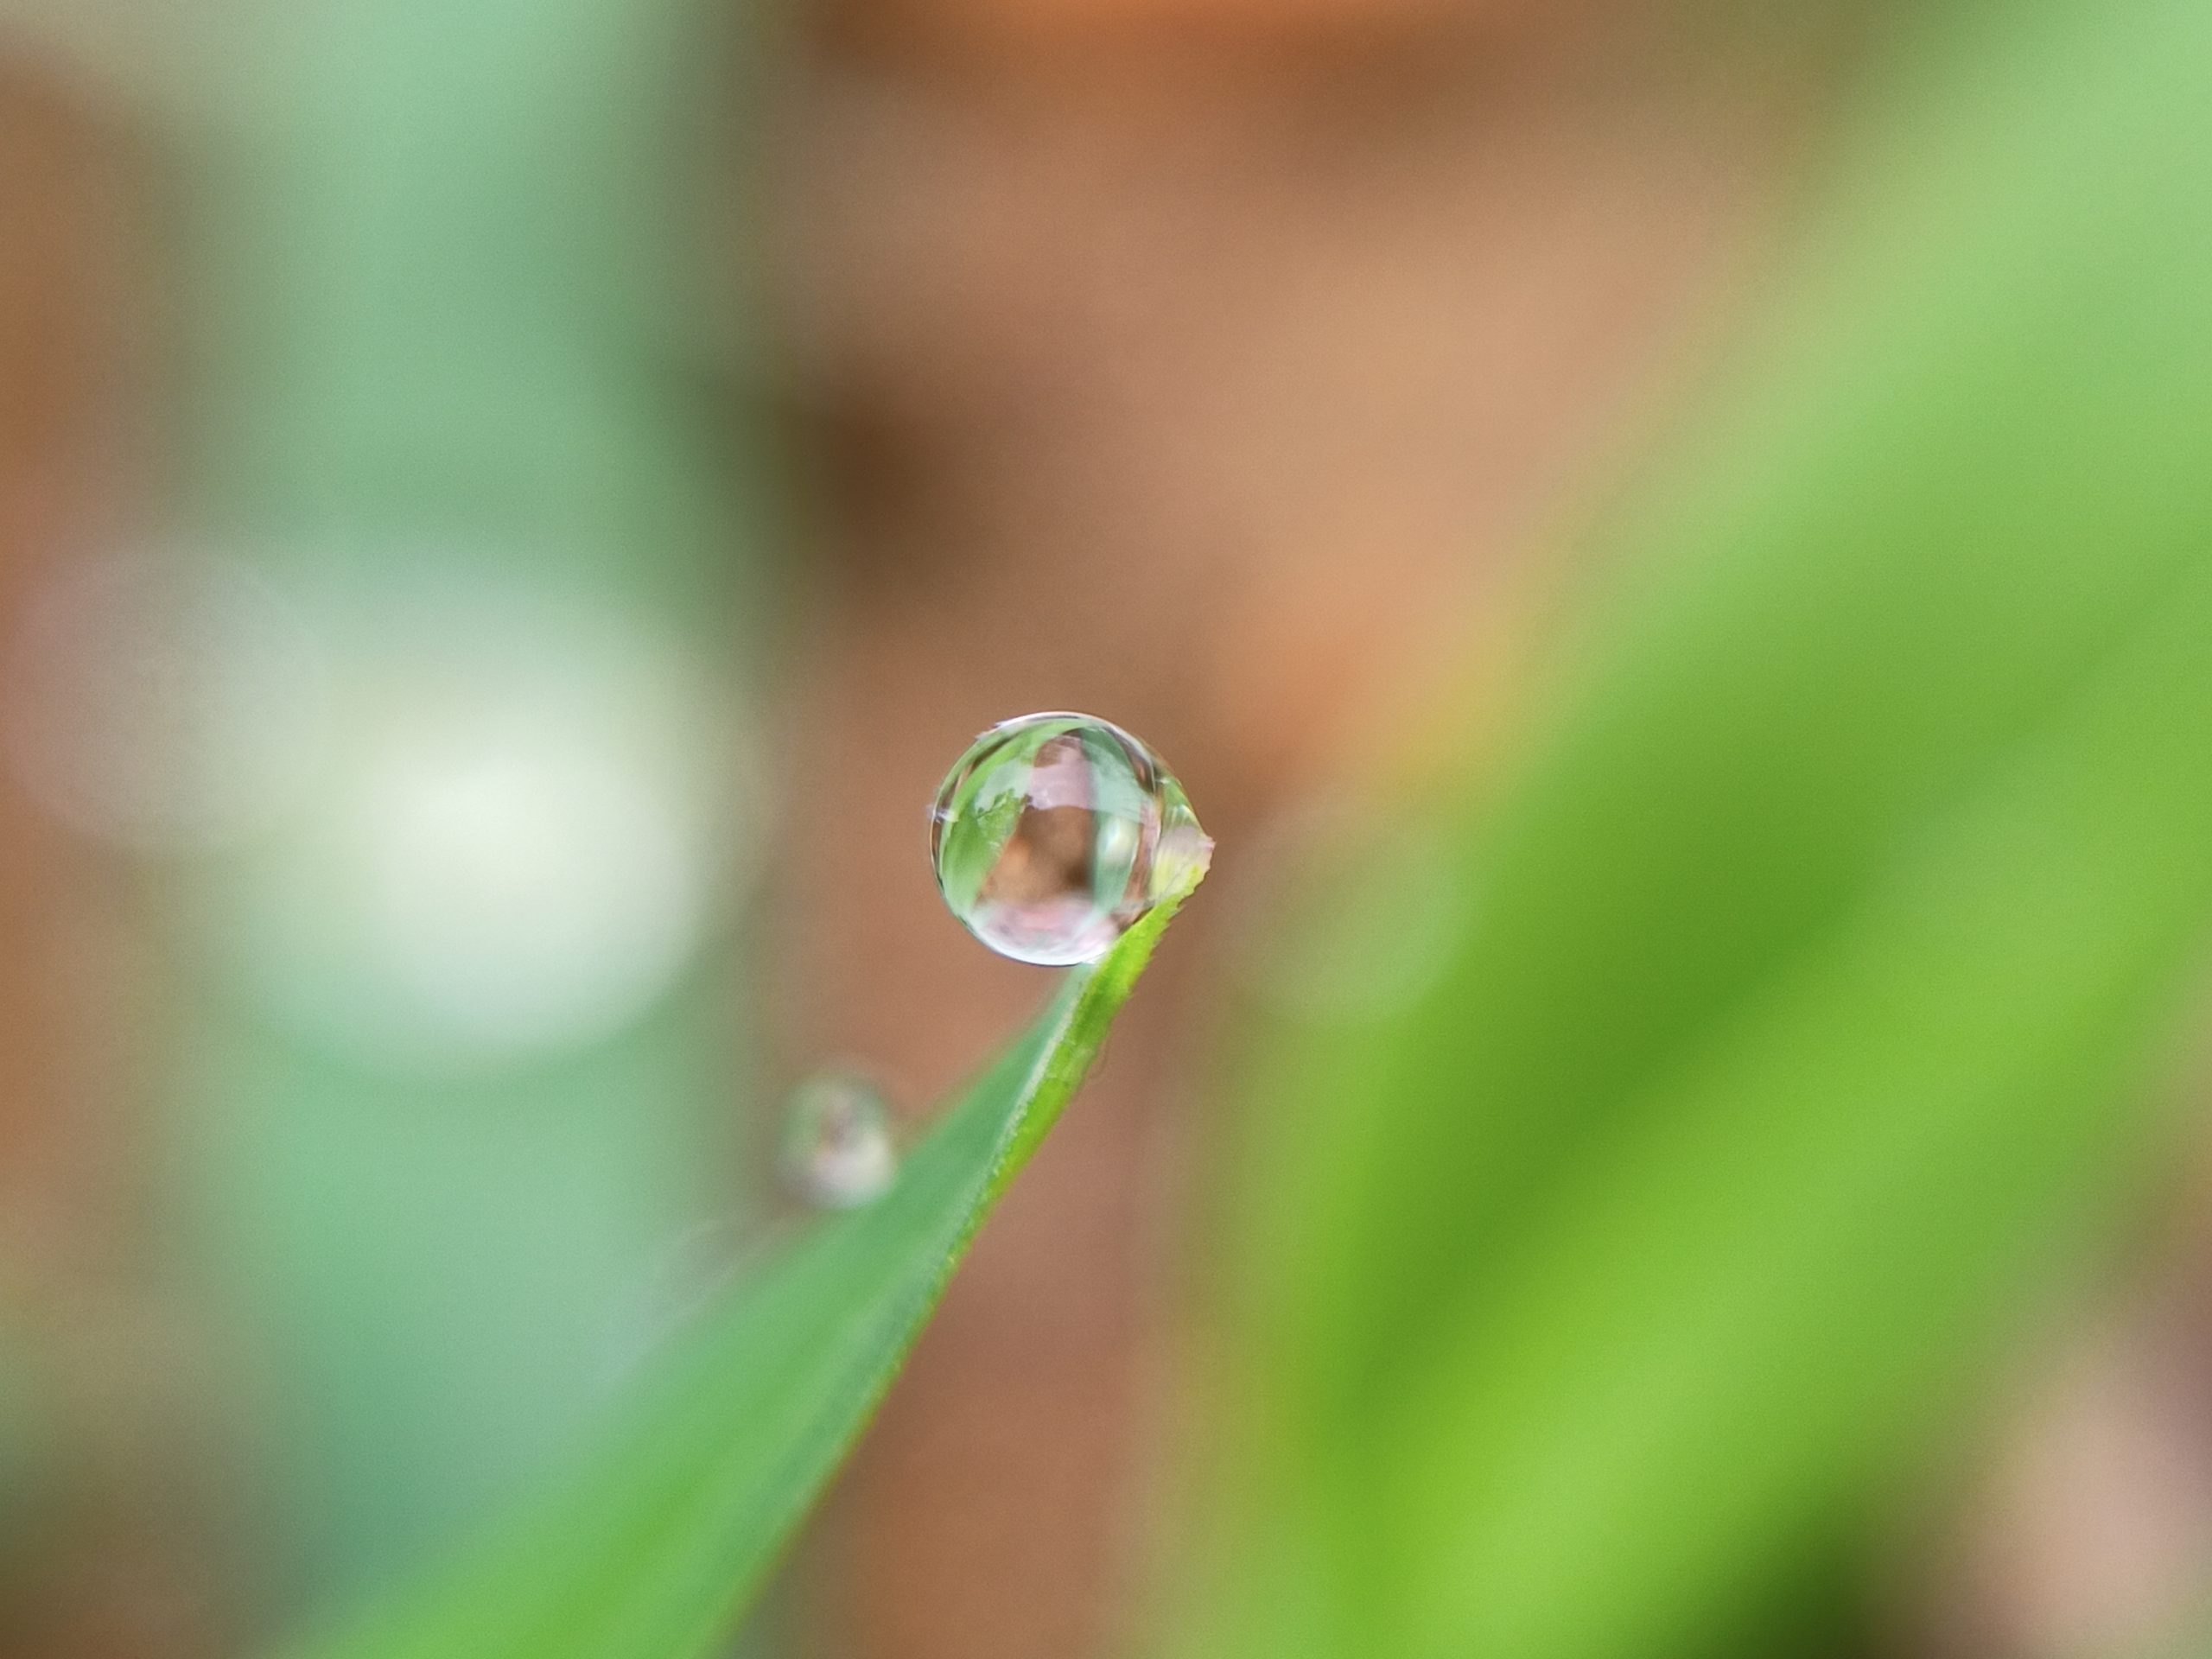 A water drop on a leaf